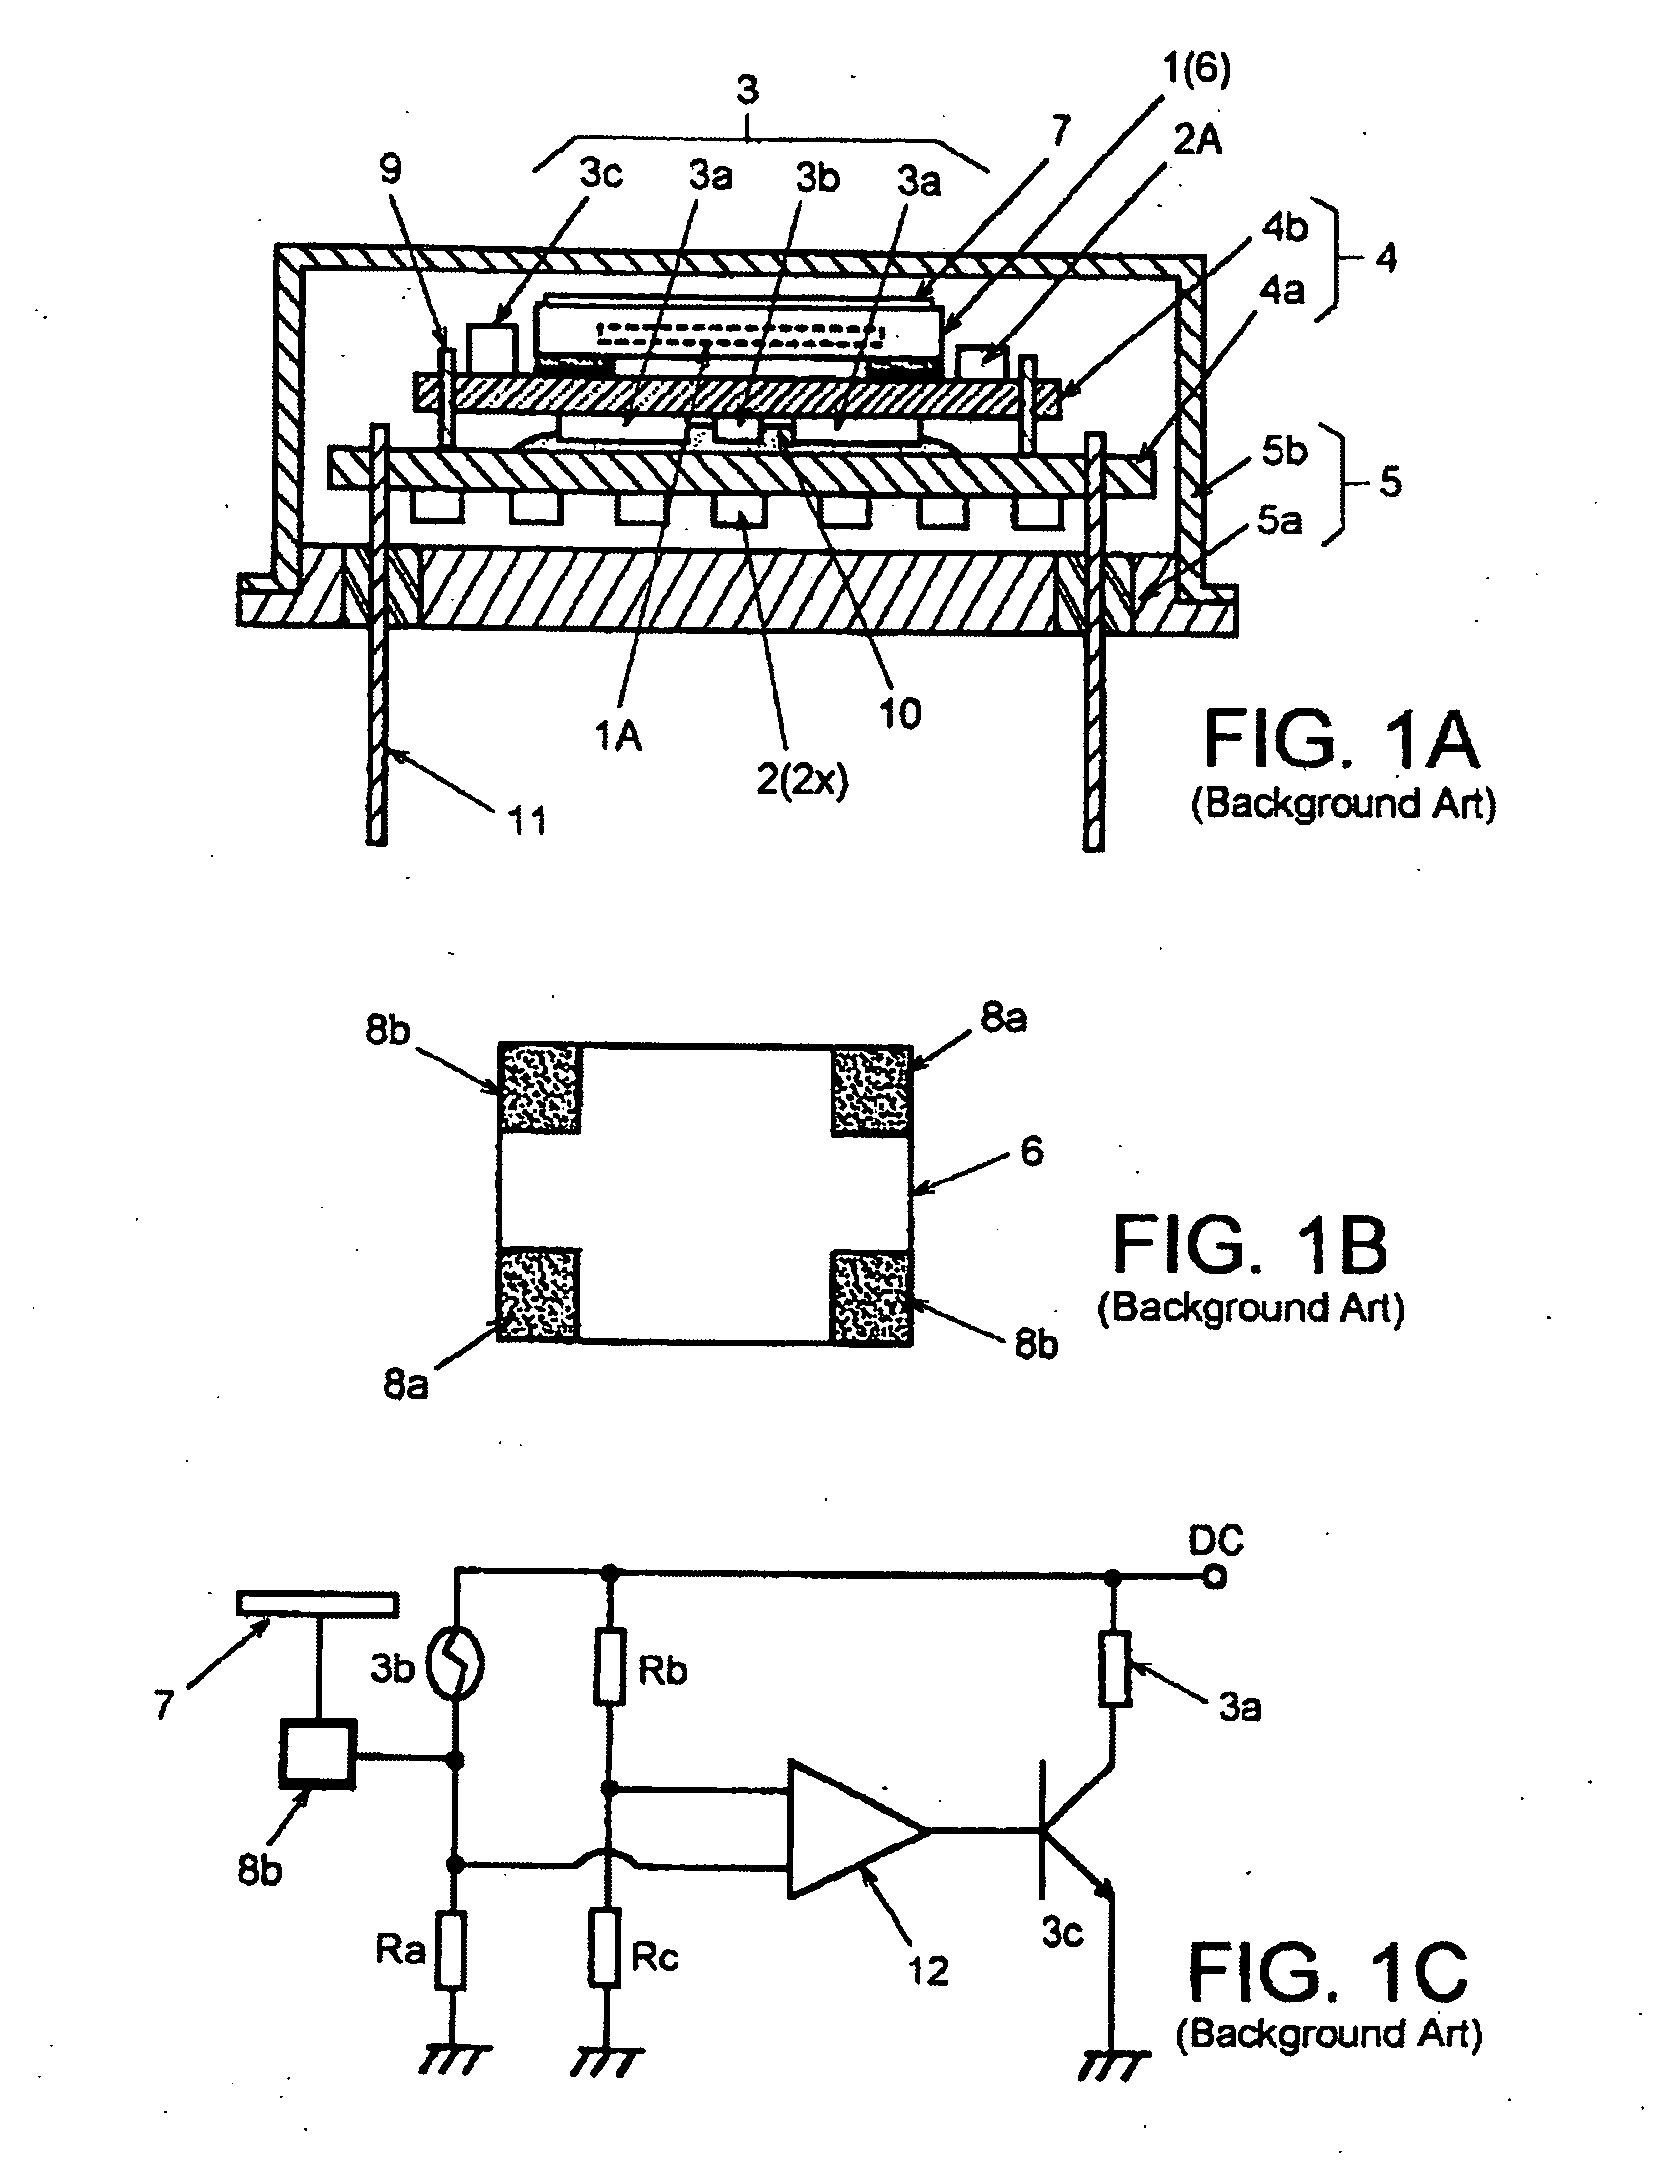 Oven-controlled crystal oscillator